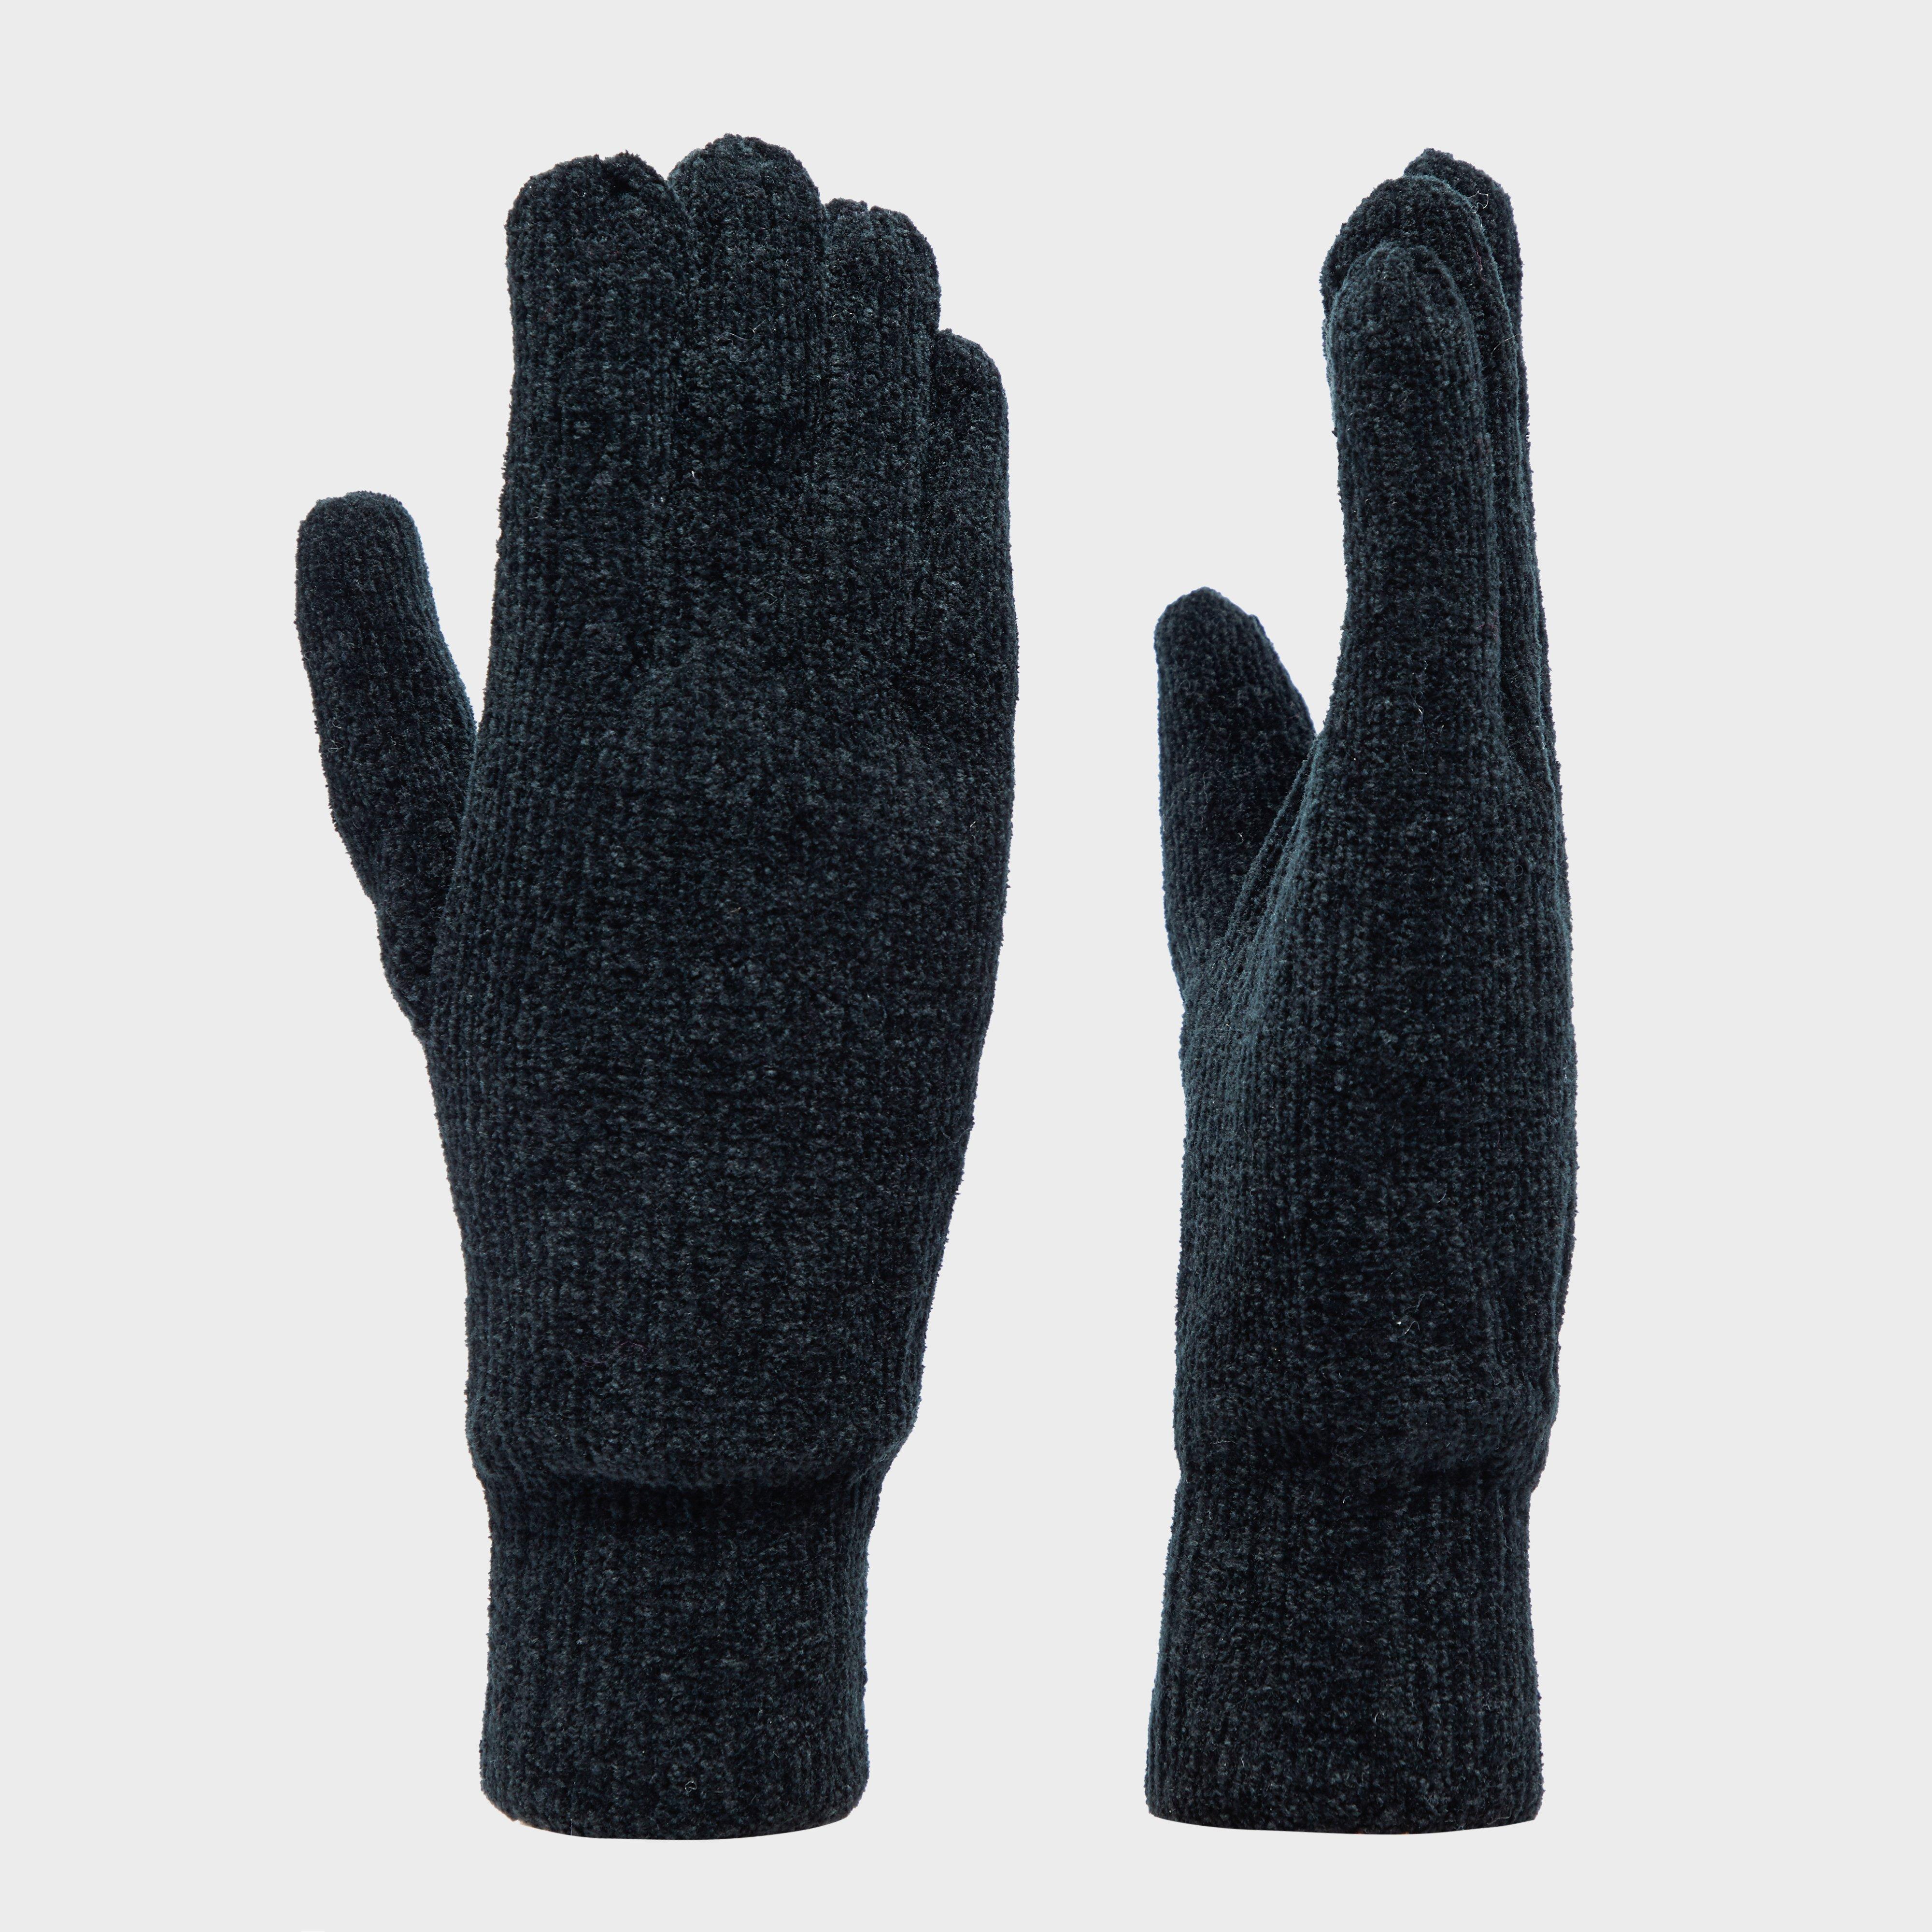 Peter Storm Womens Thinsulate Chennile Gloves - Black/blk  Black/blk